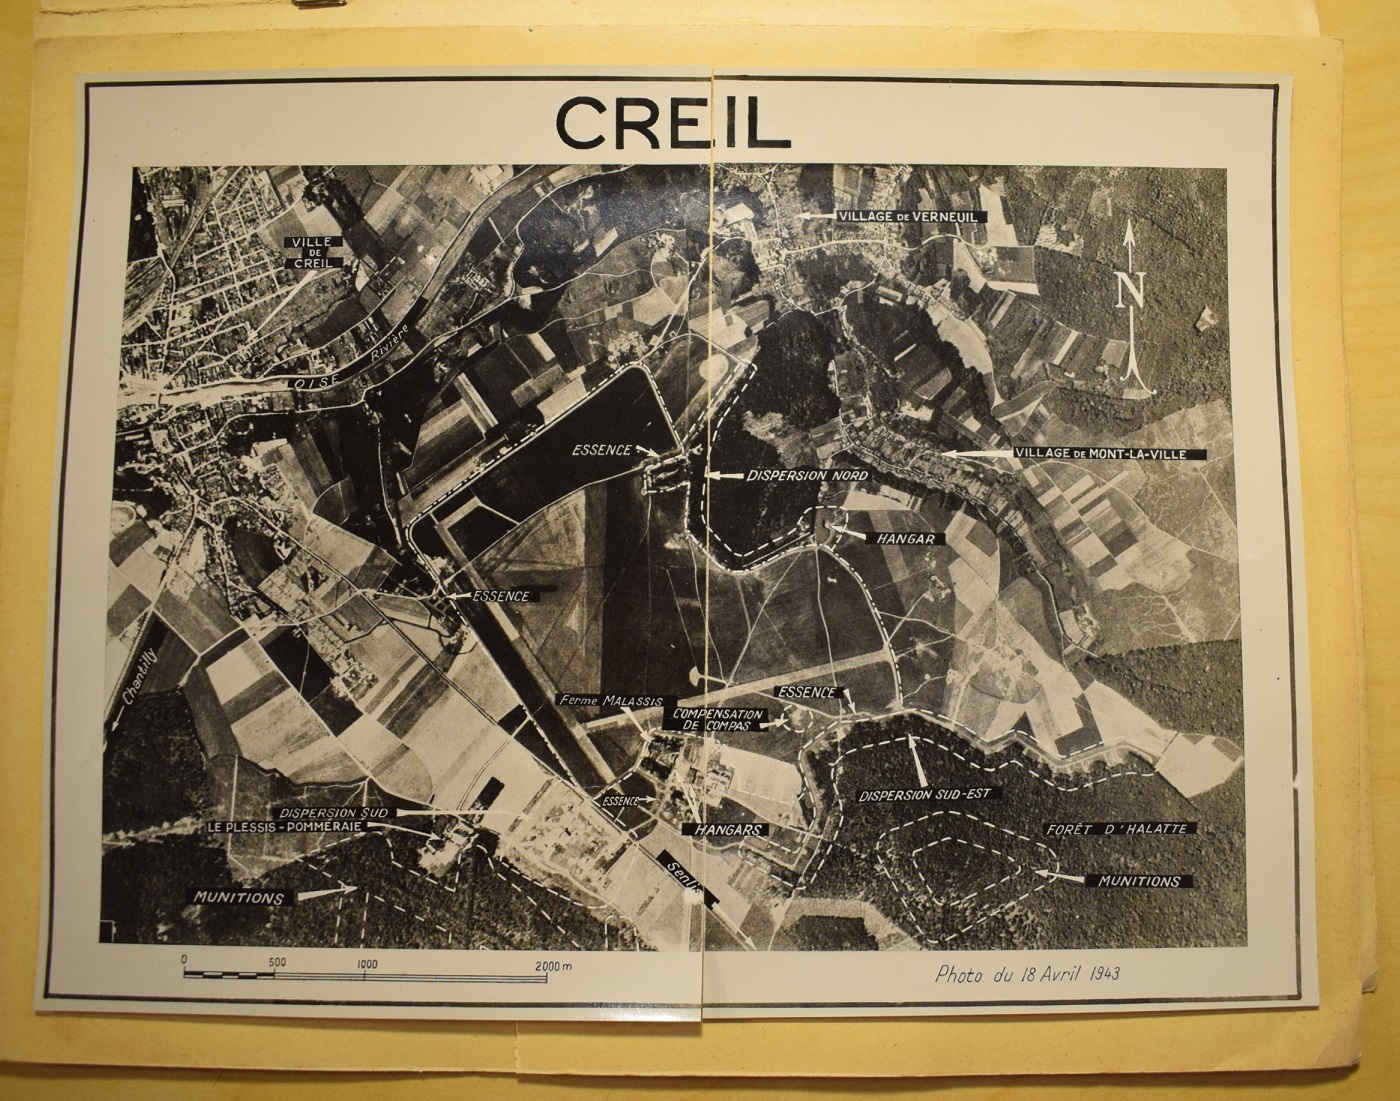 Terrain de Creil - avril 1943